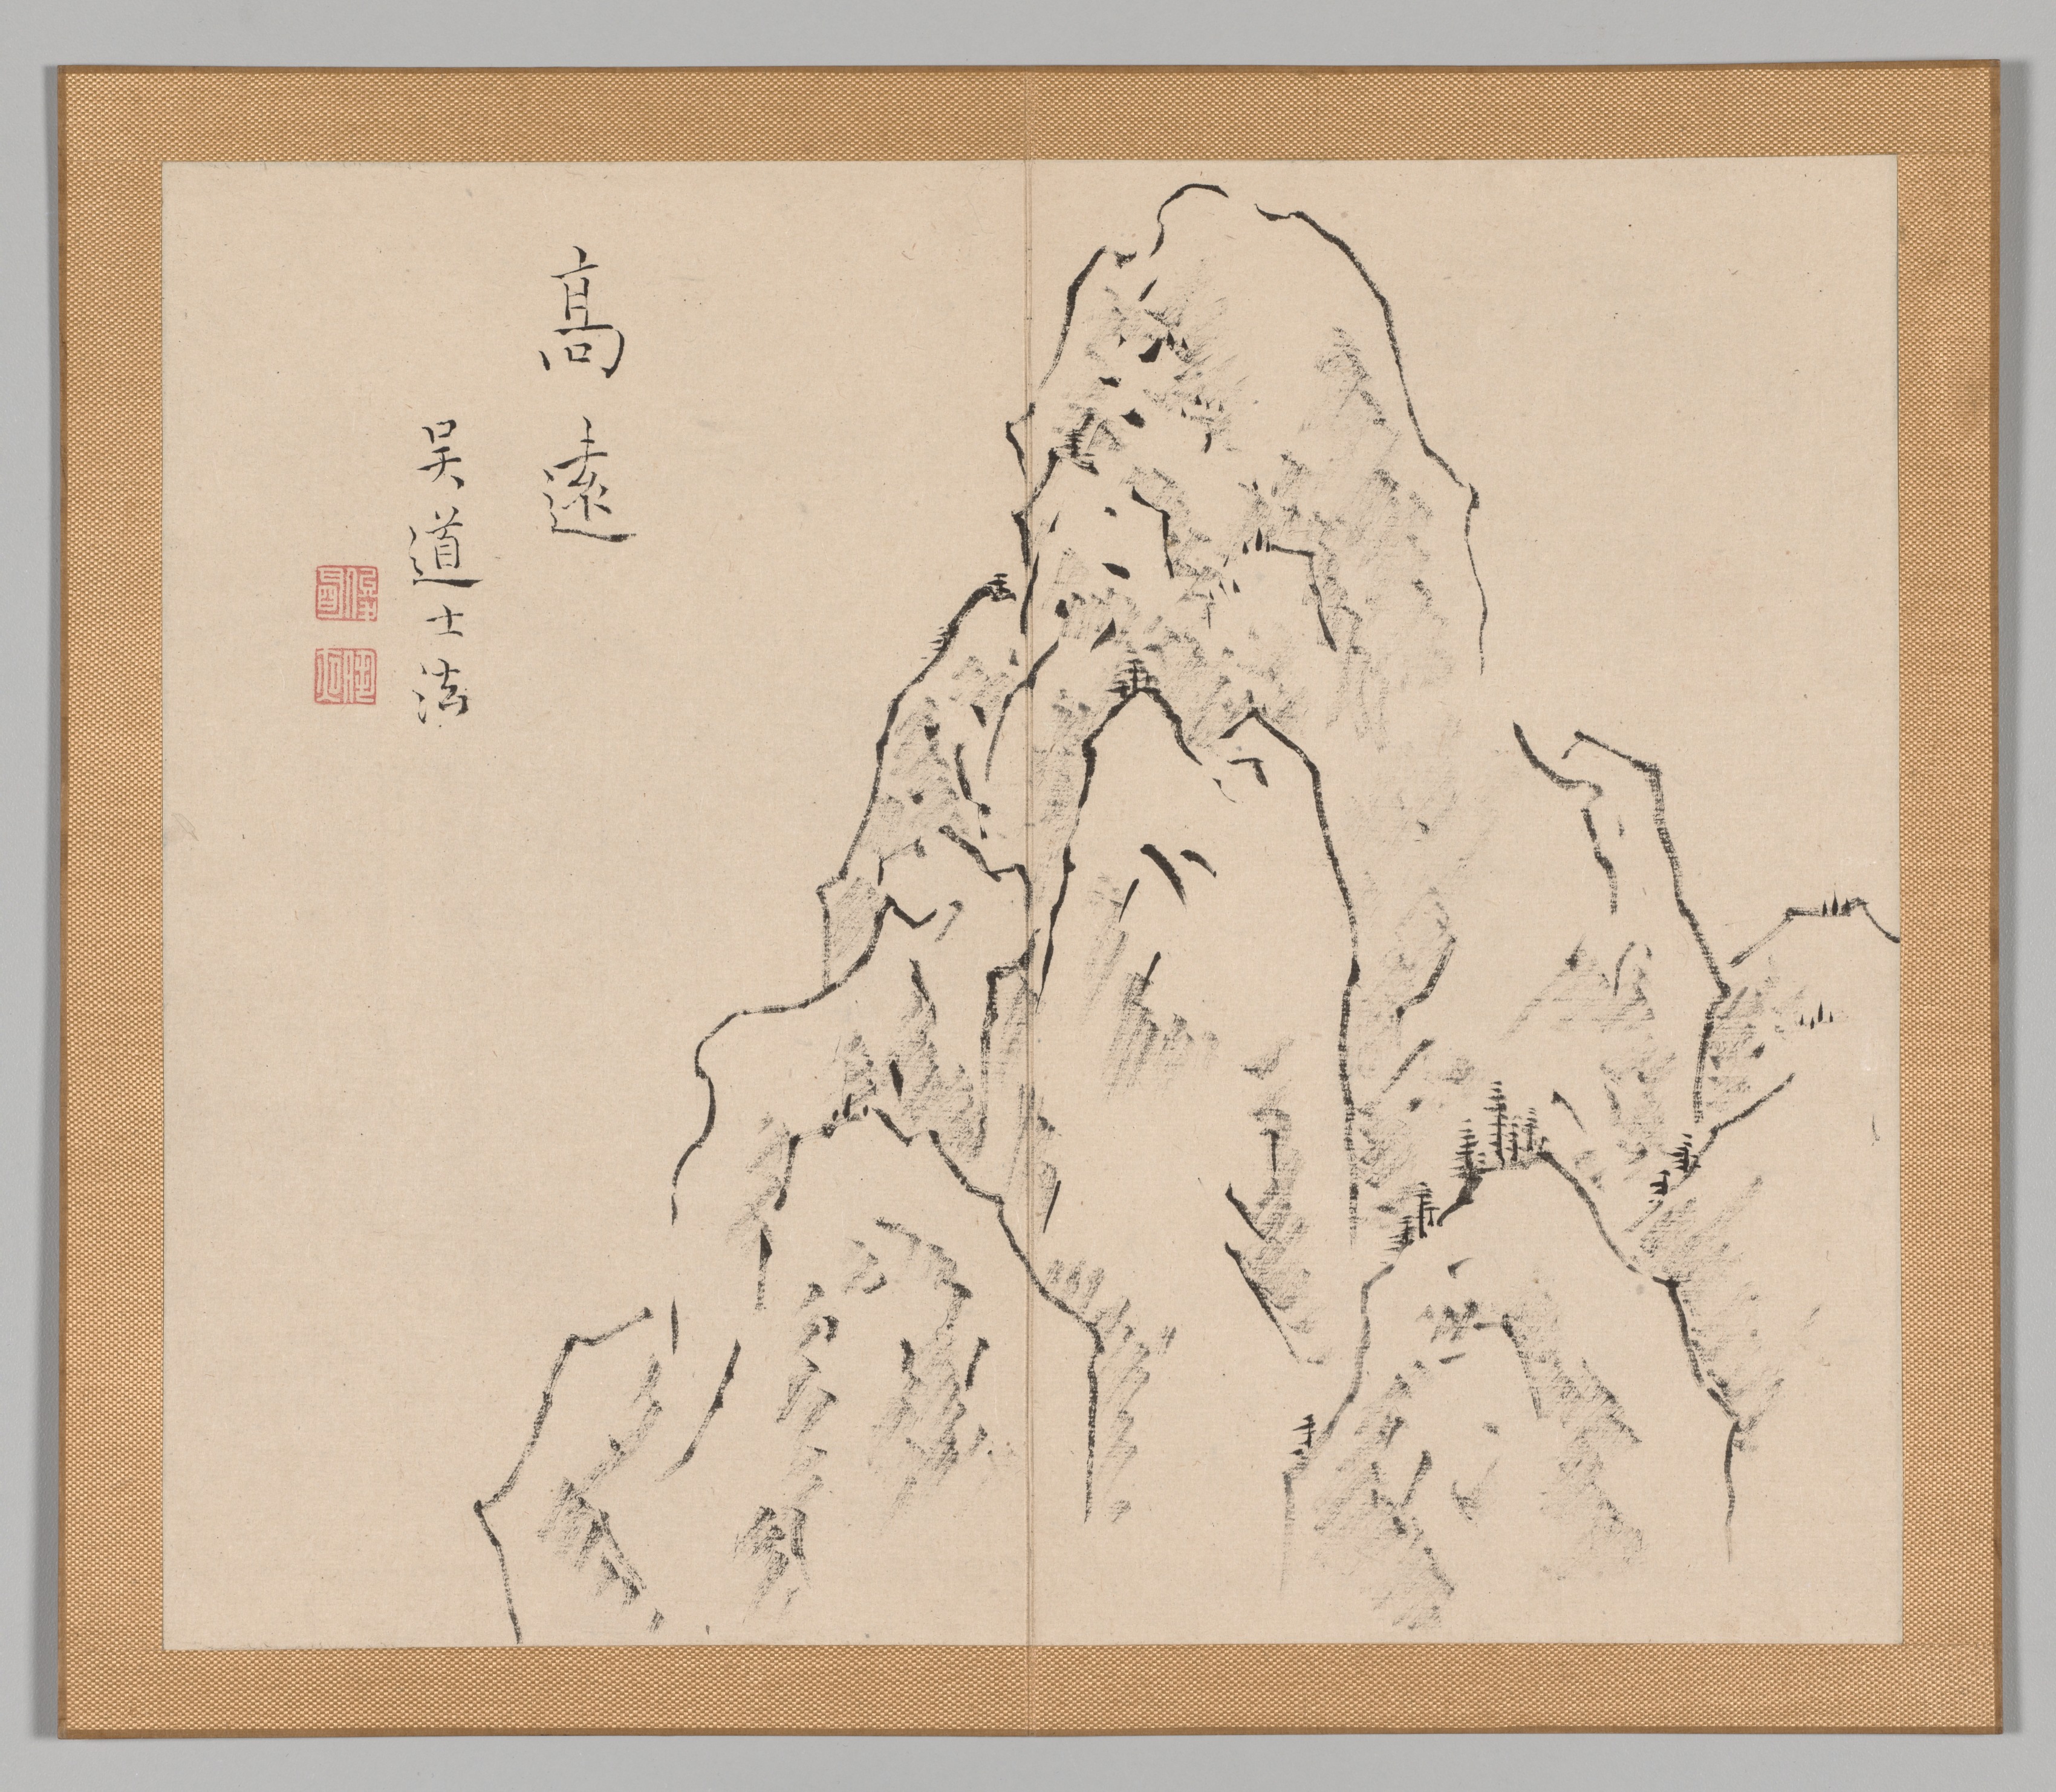 Reverberations of Taiga, Volume 2 (leaf 7)